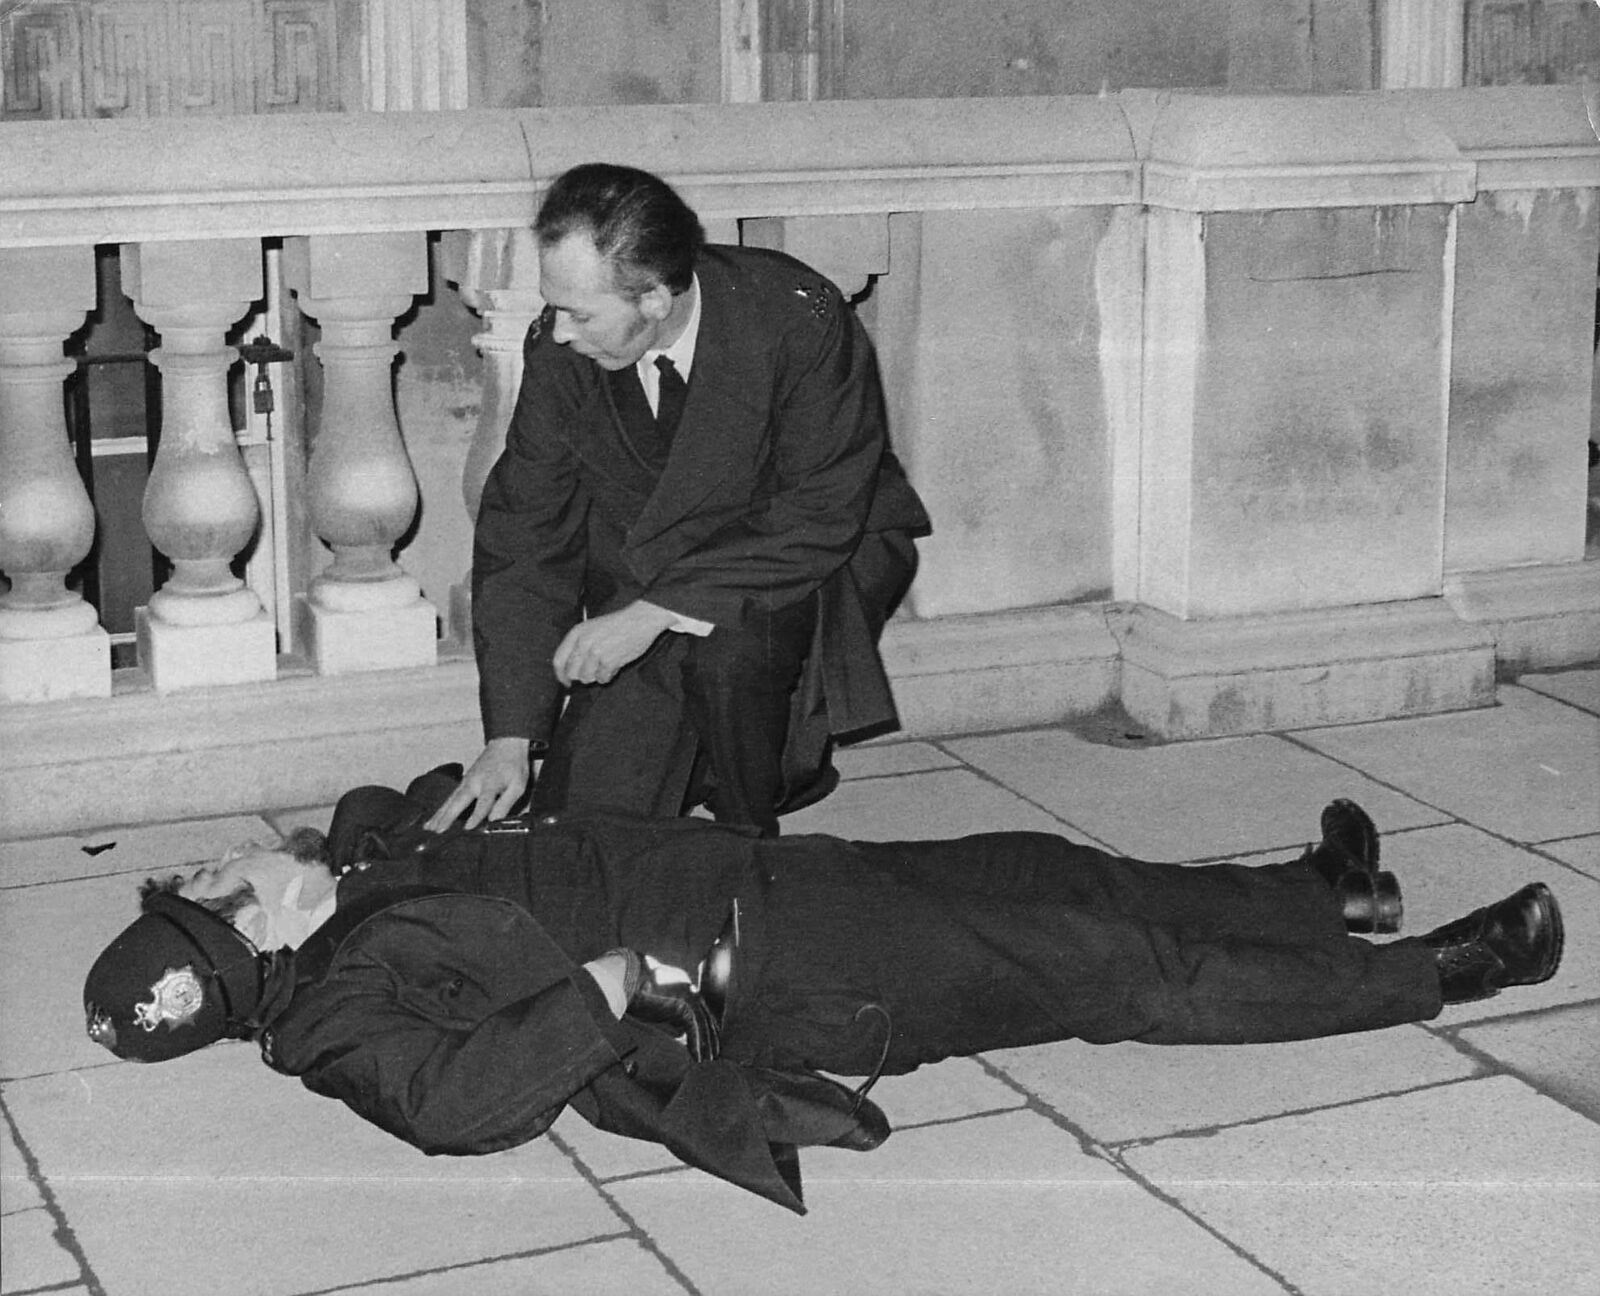 1972 Press Photo Policeman Injured Laying Down Whitehall Londonberry riots kg